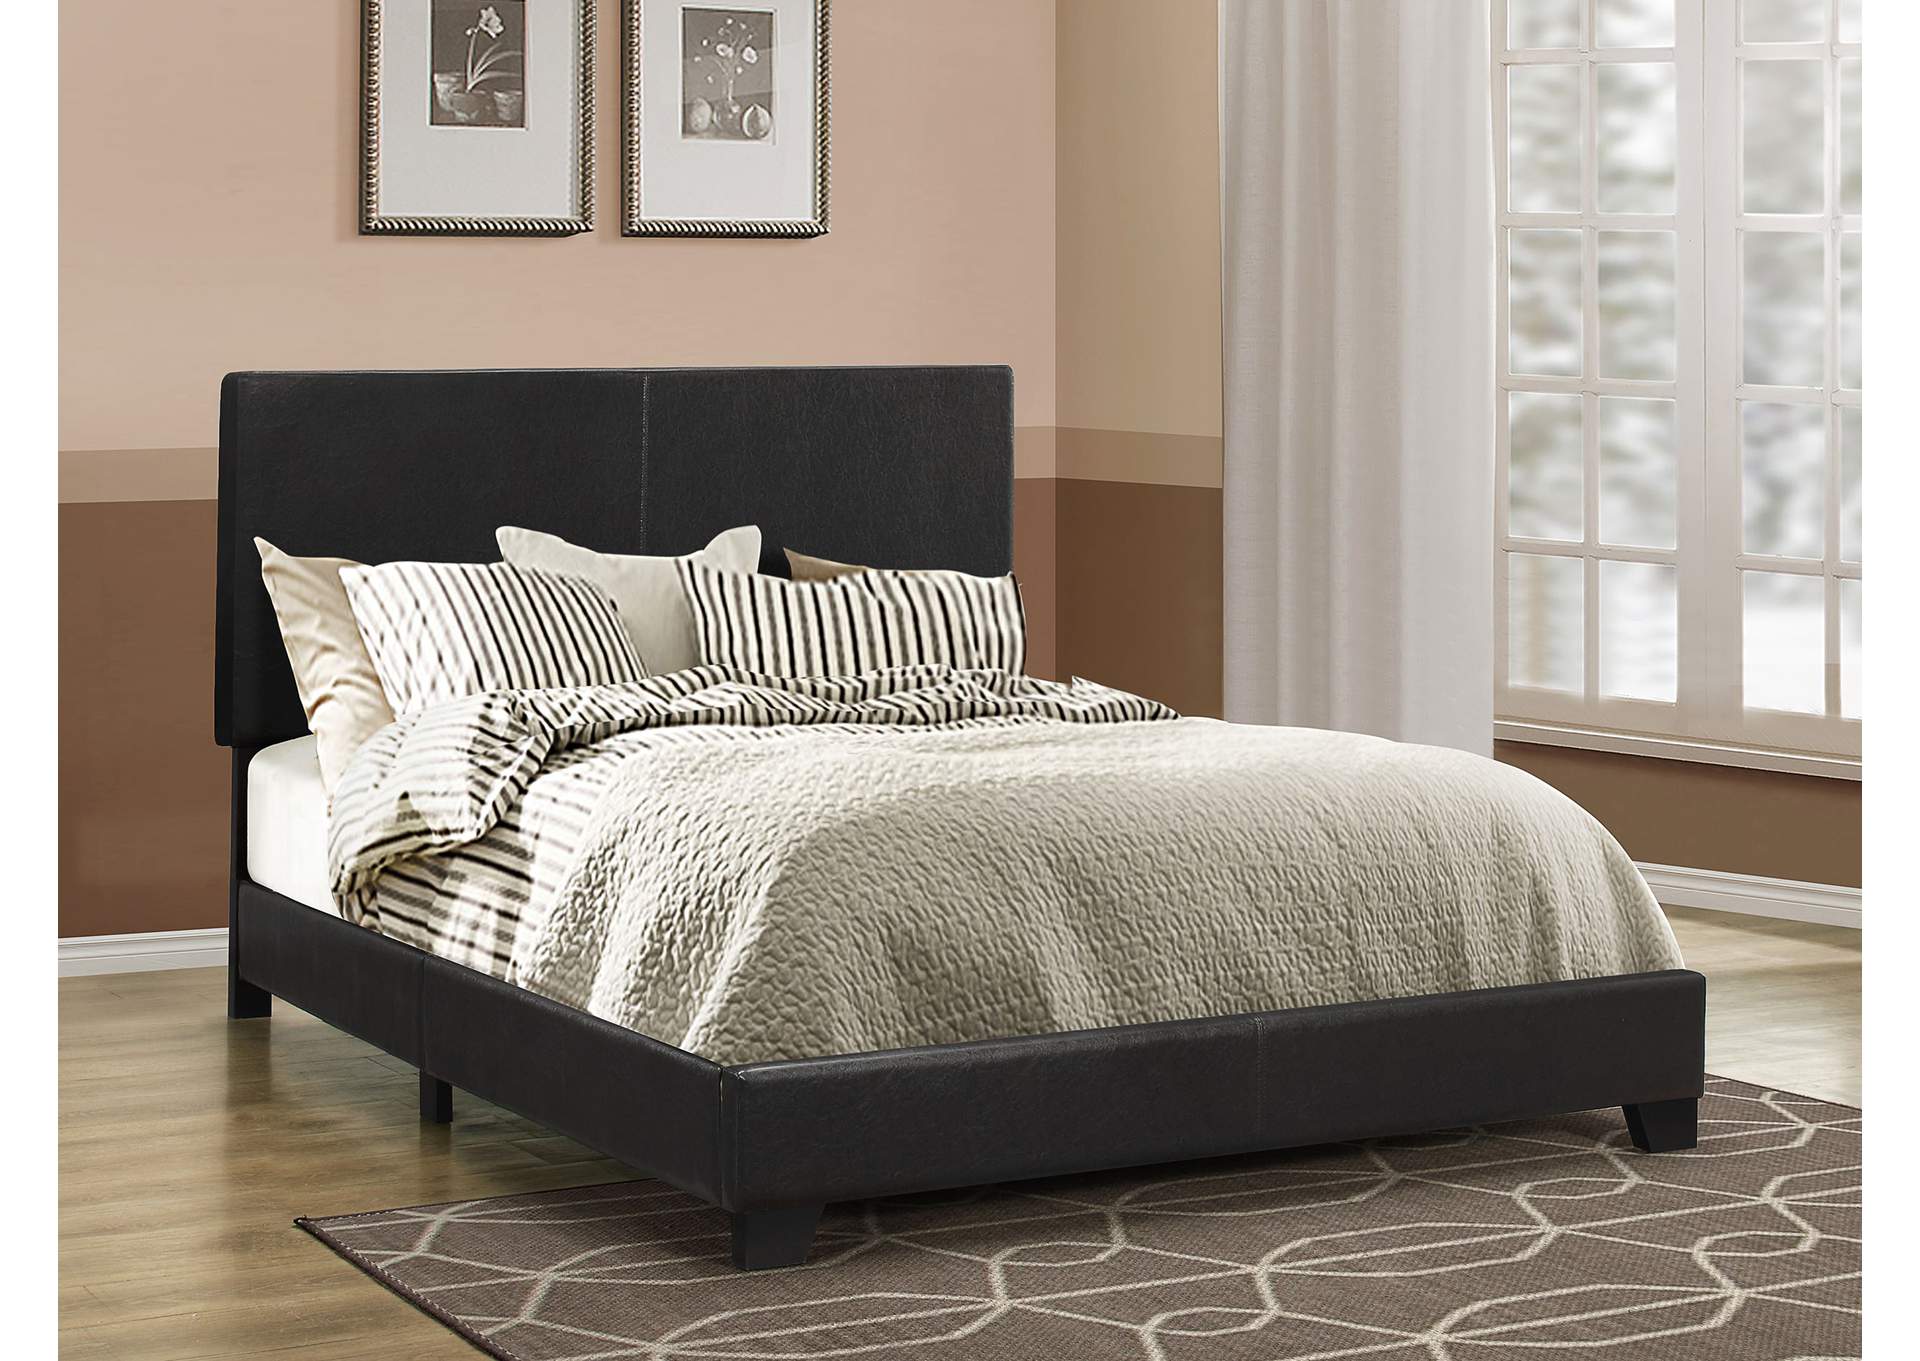 Dorian Upholstered Queen Bed Black,Coaster Furniture